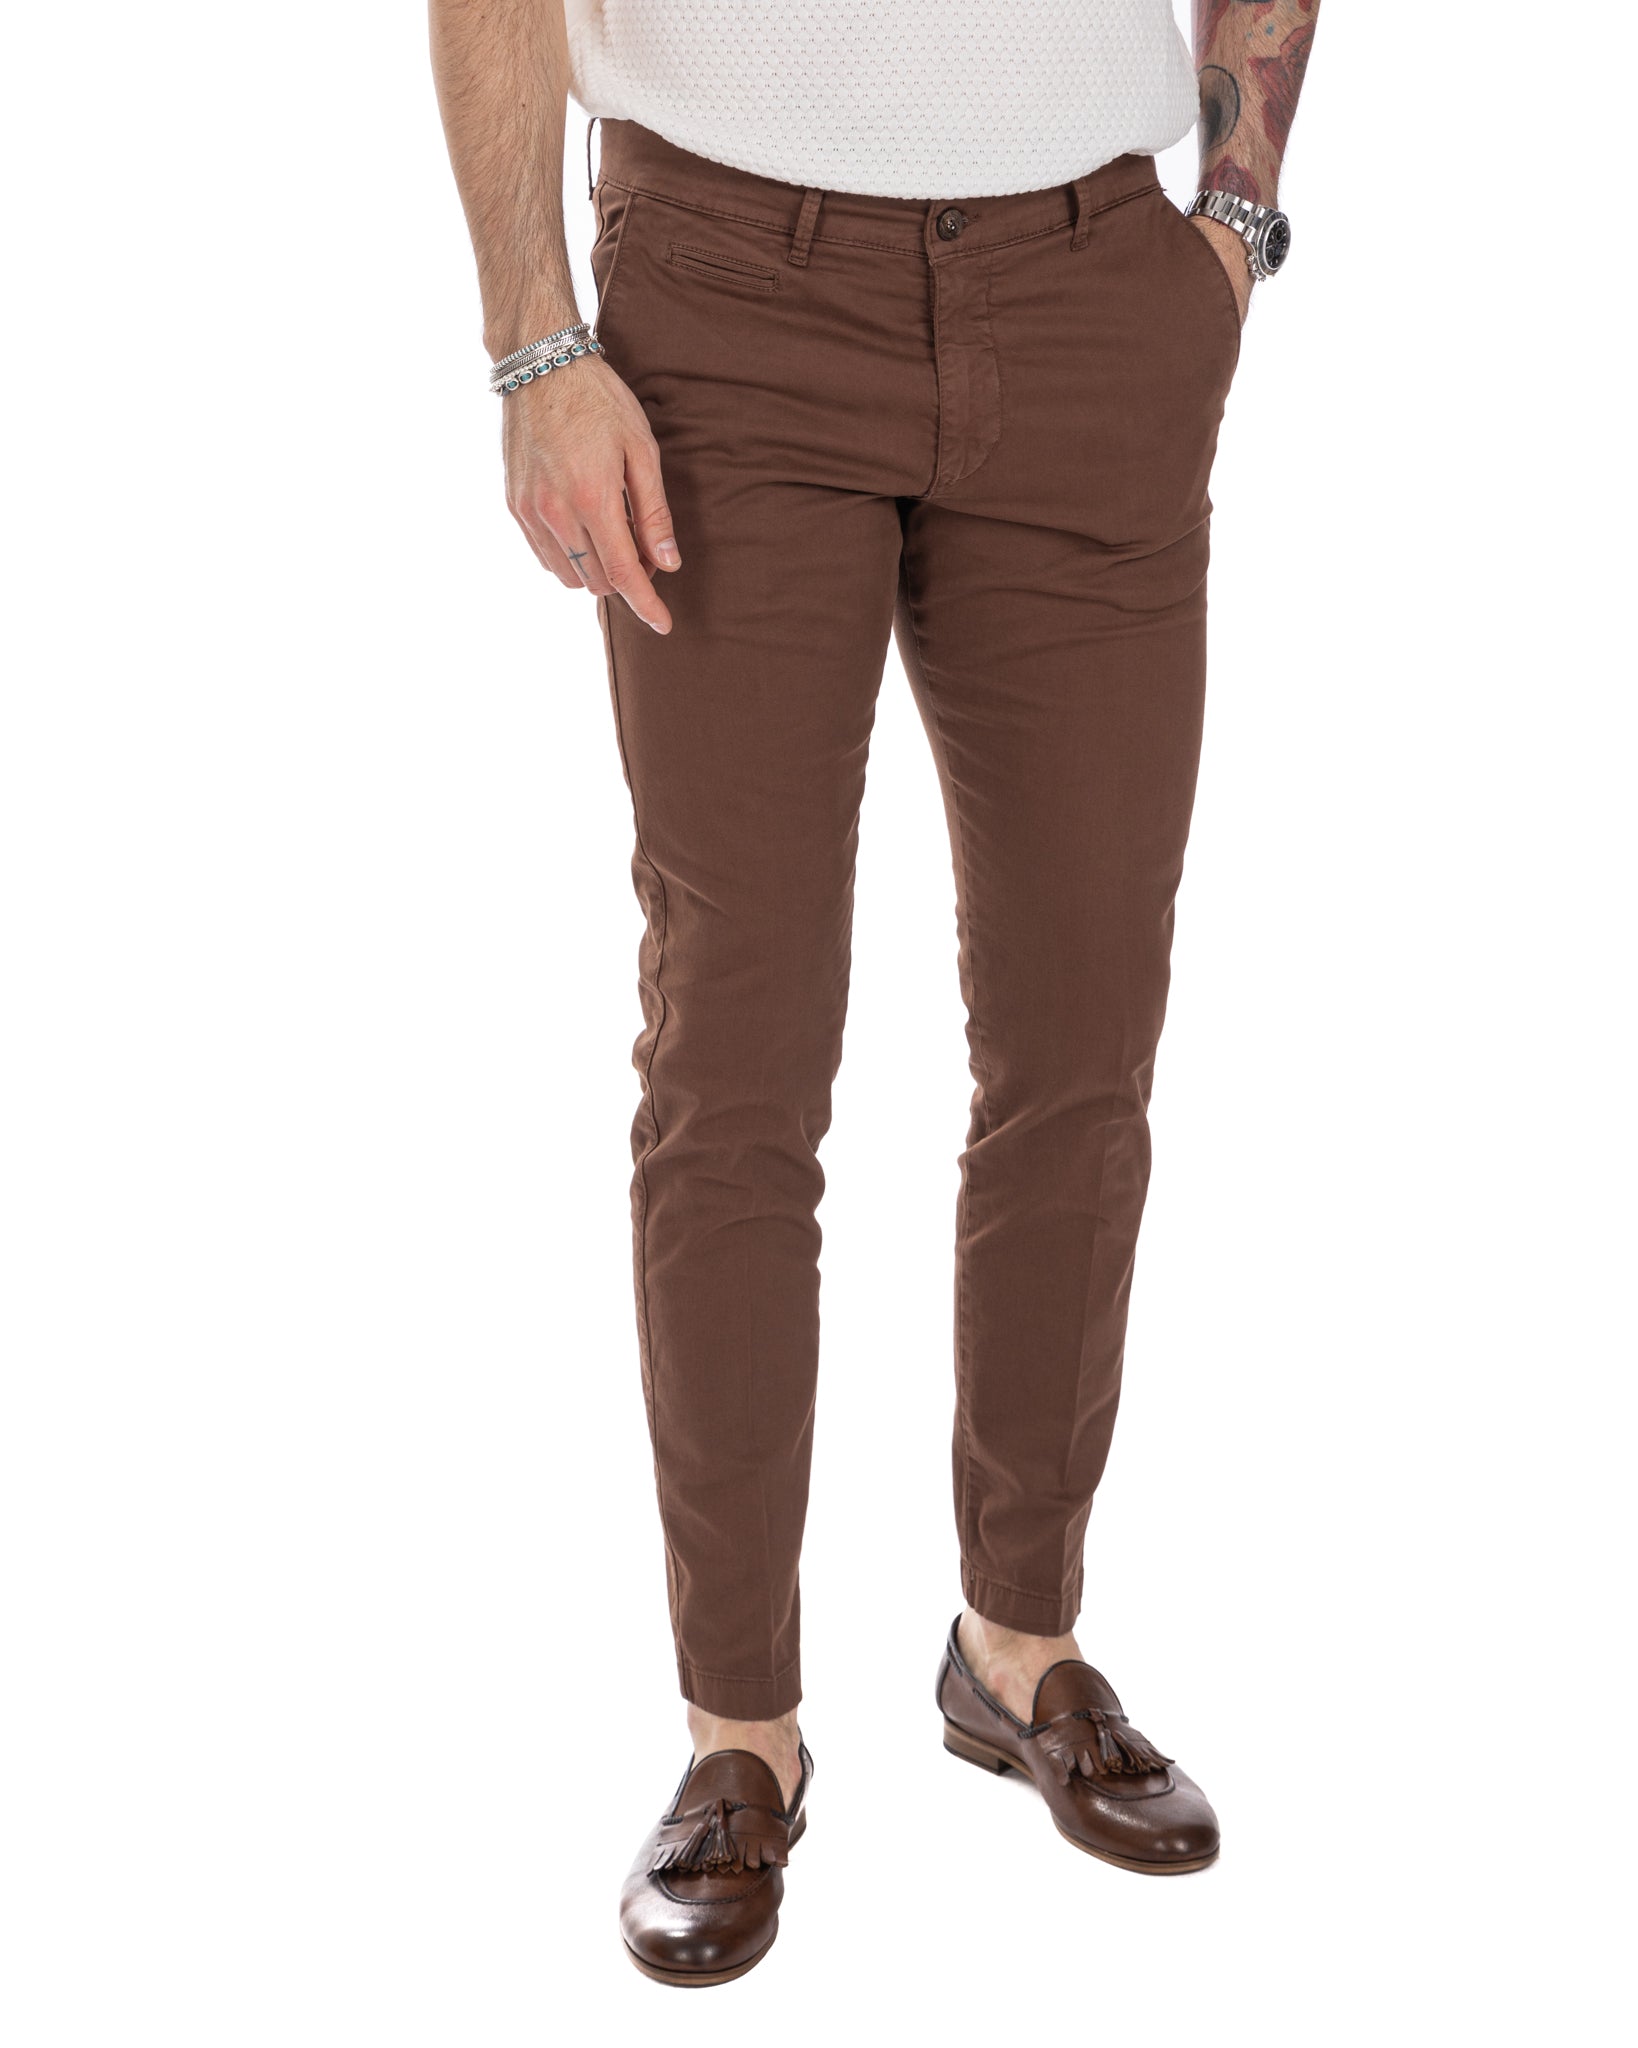 Frank - pantalon marron basique